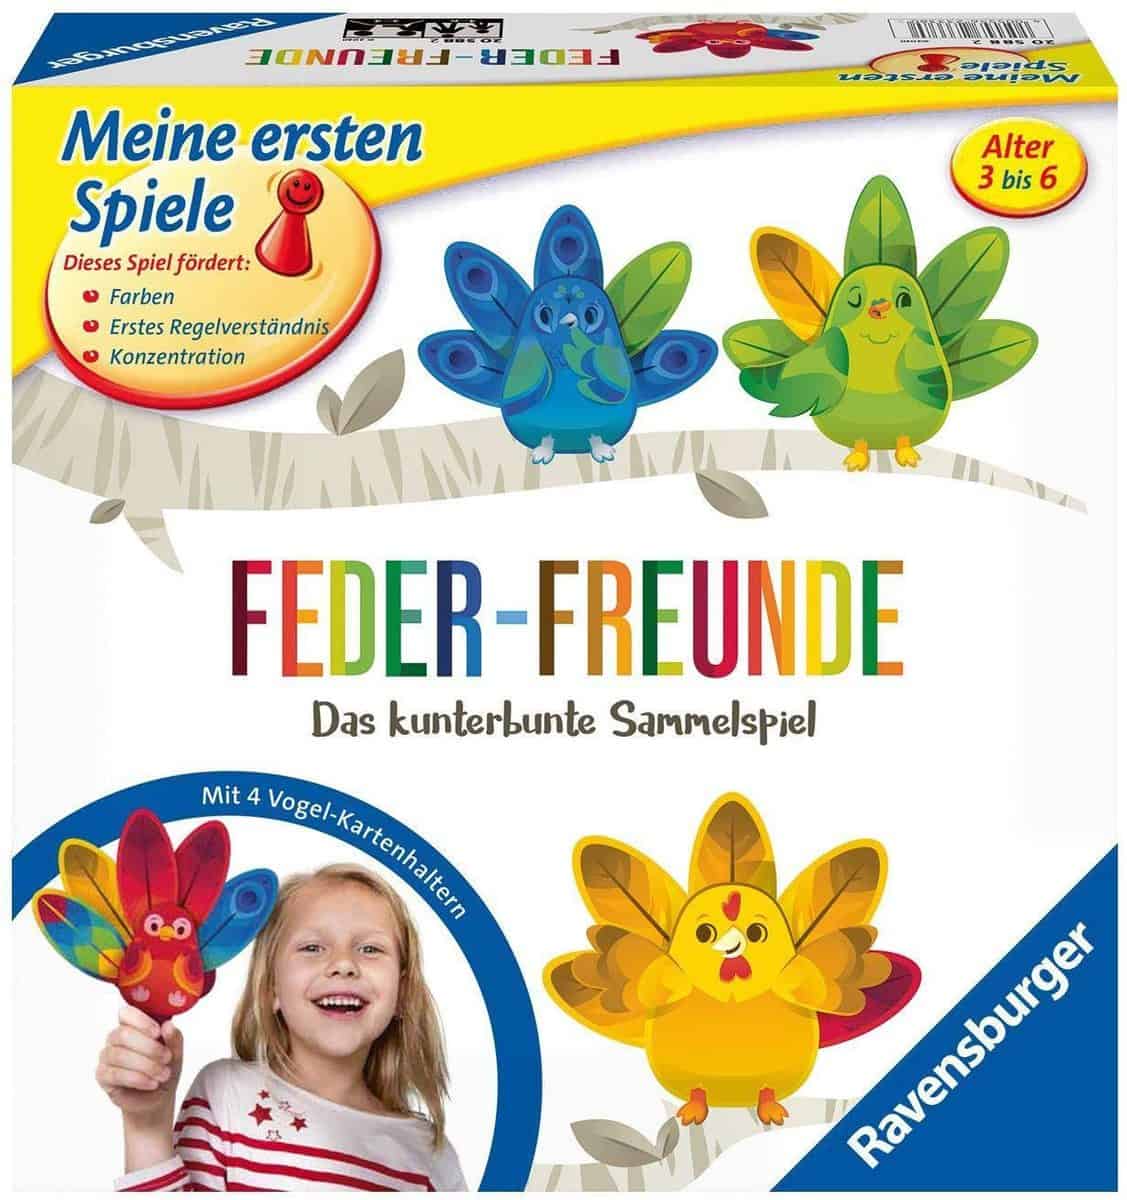 Ravensburger 20587- Feder-Freunde - Kinderspiel für 5,70 € inkl. Prime-Versand (statt 12,98 €)